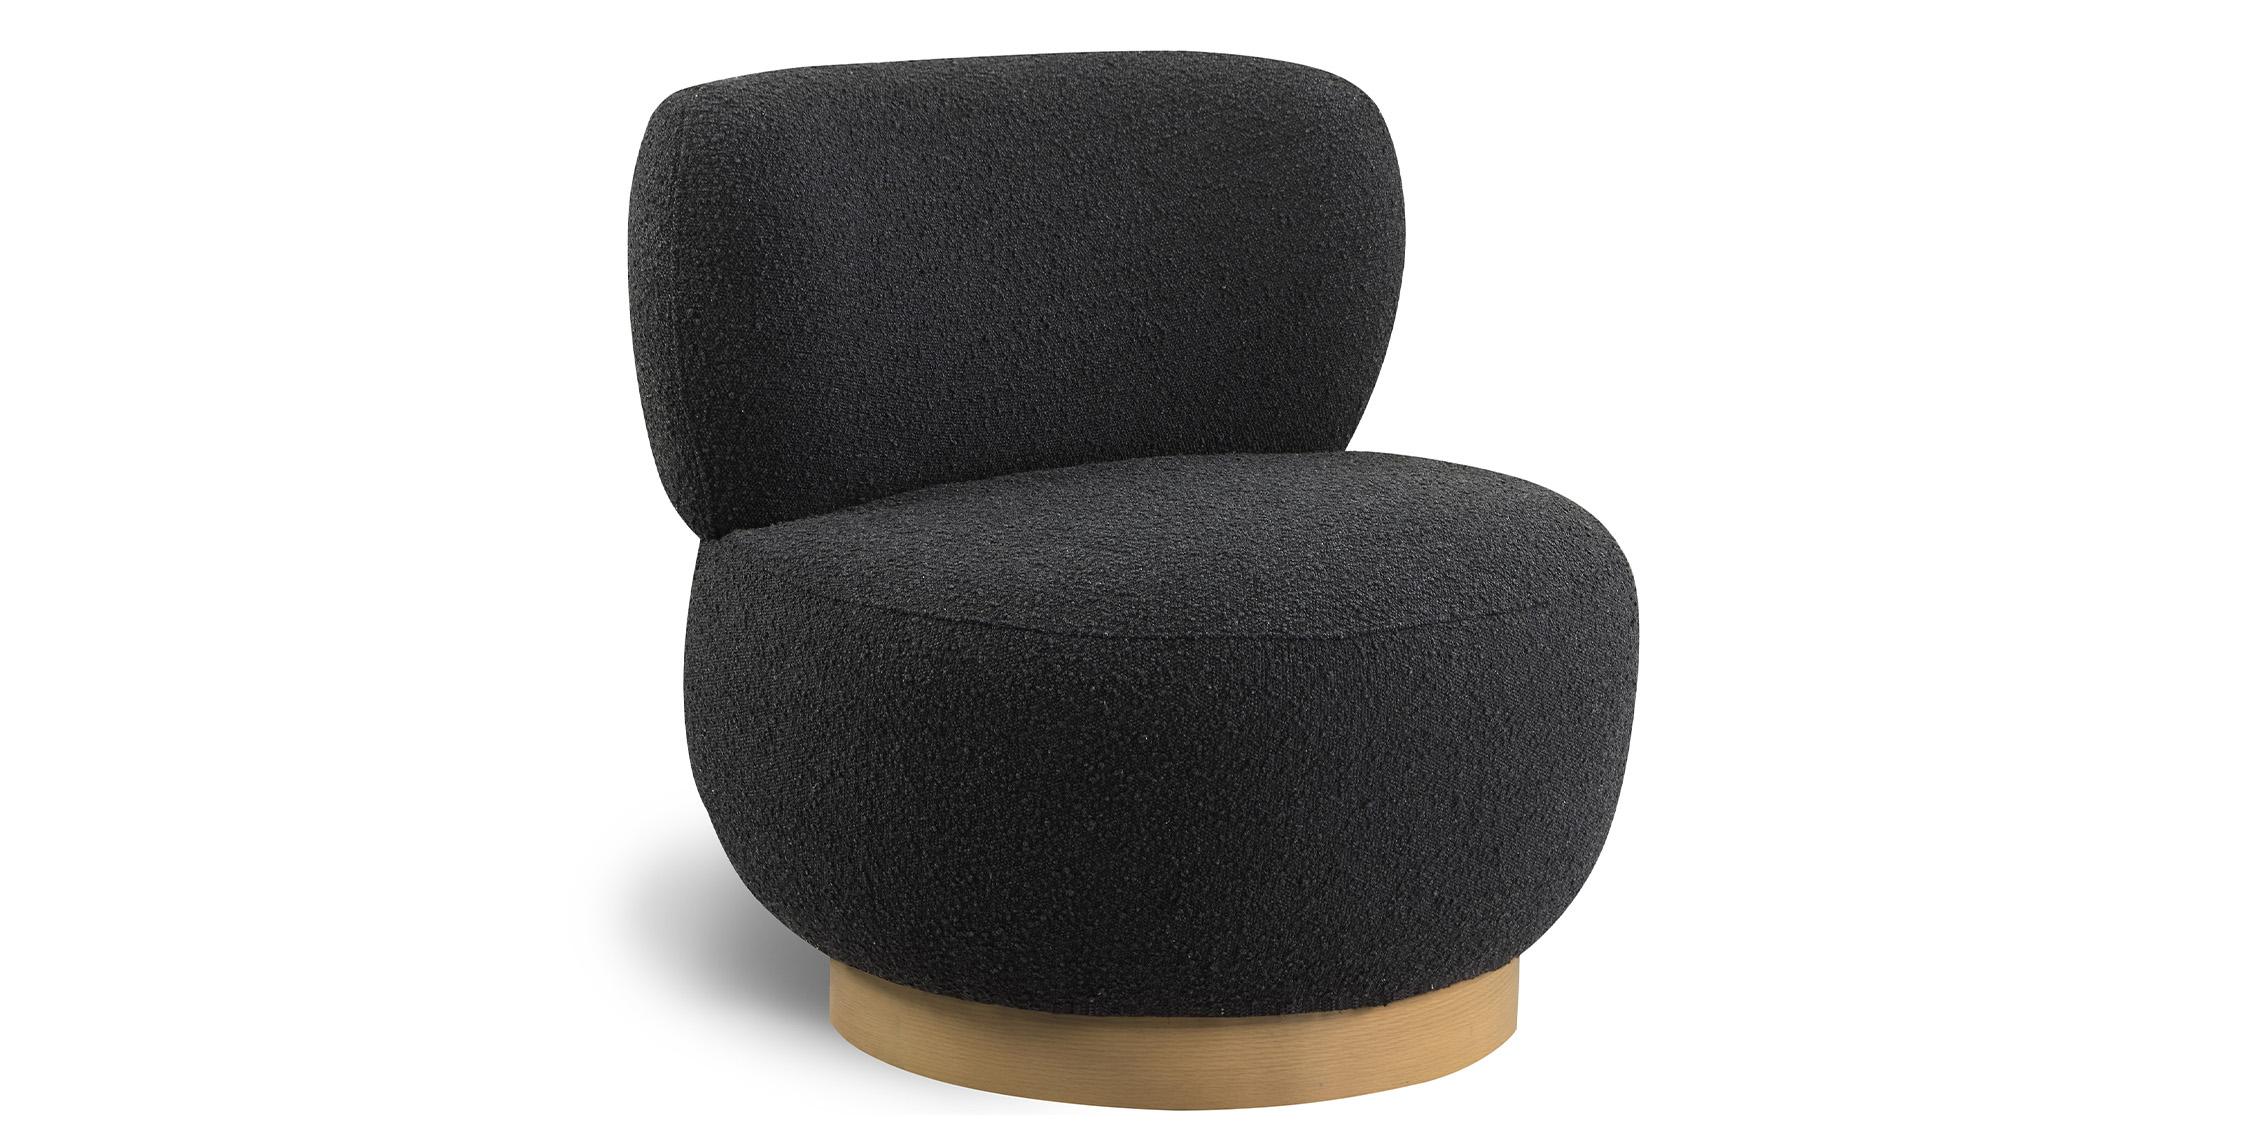 Contemporary, Modern Accent Chair CALAIS 556Black 556Black in Black 